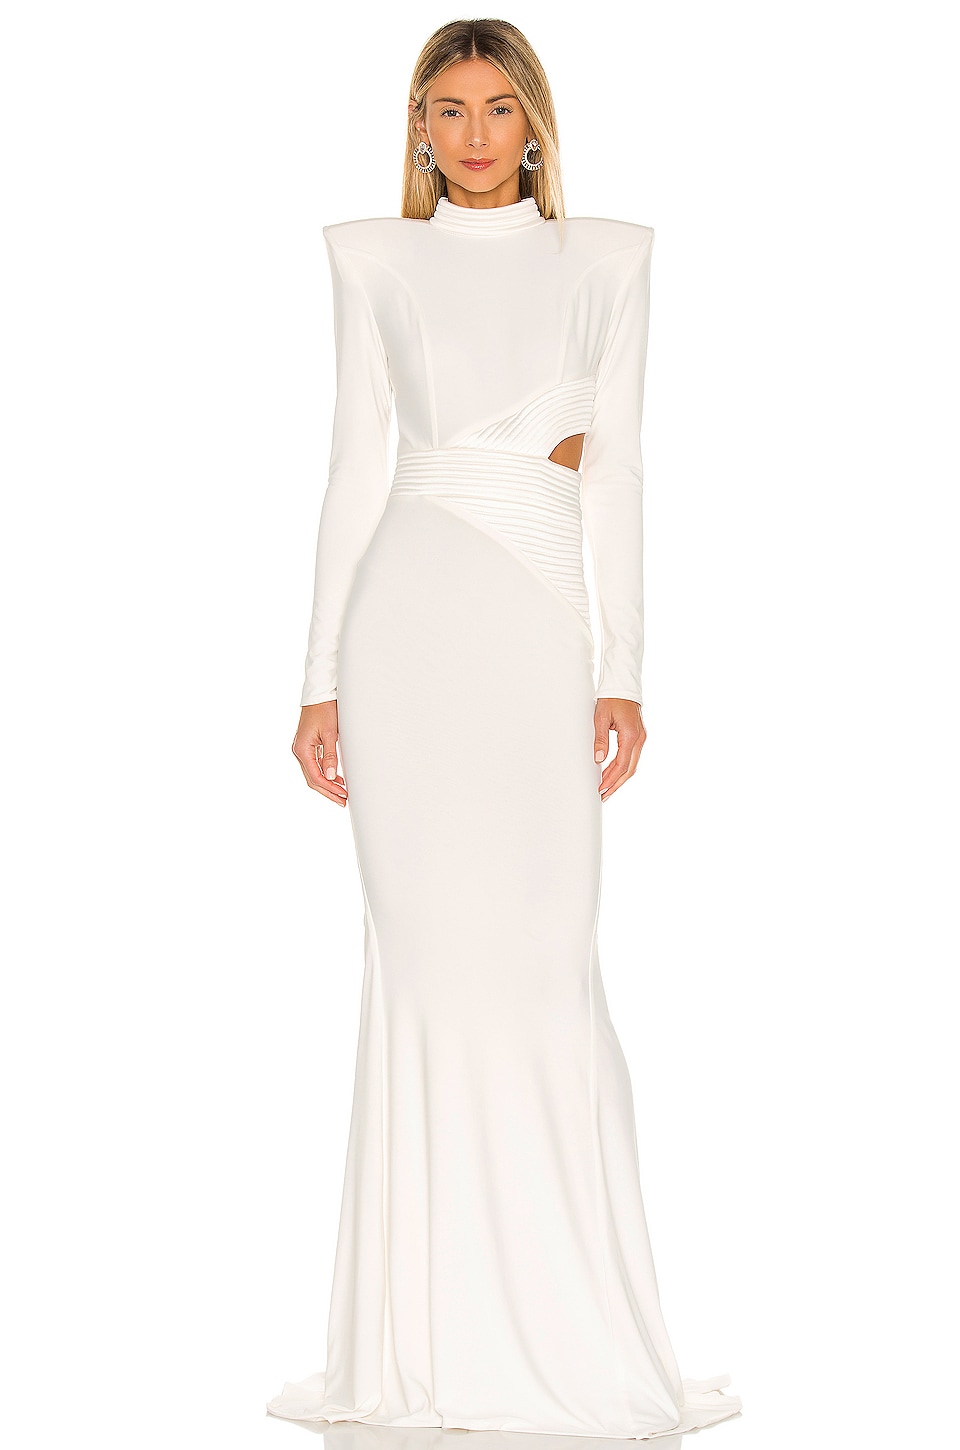 Zhivago Message To Love Gown in White | REVOLVE